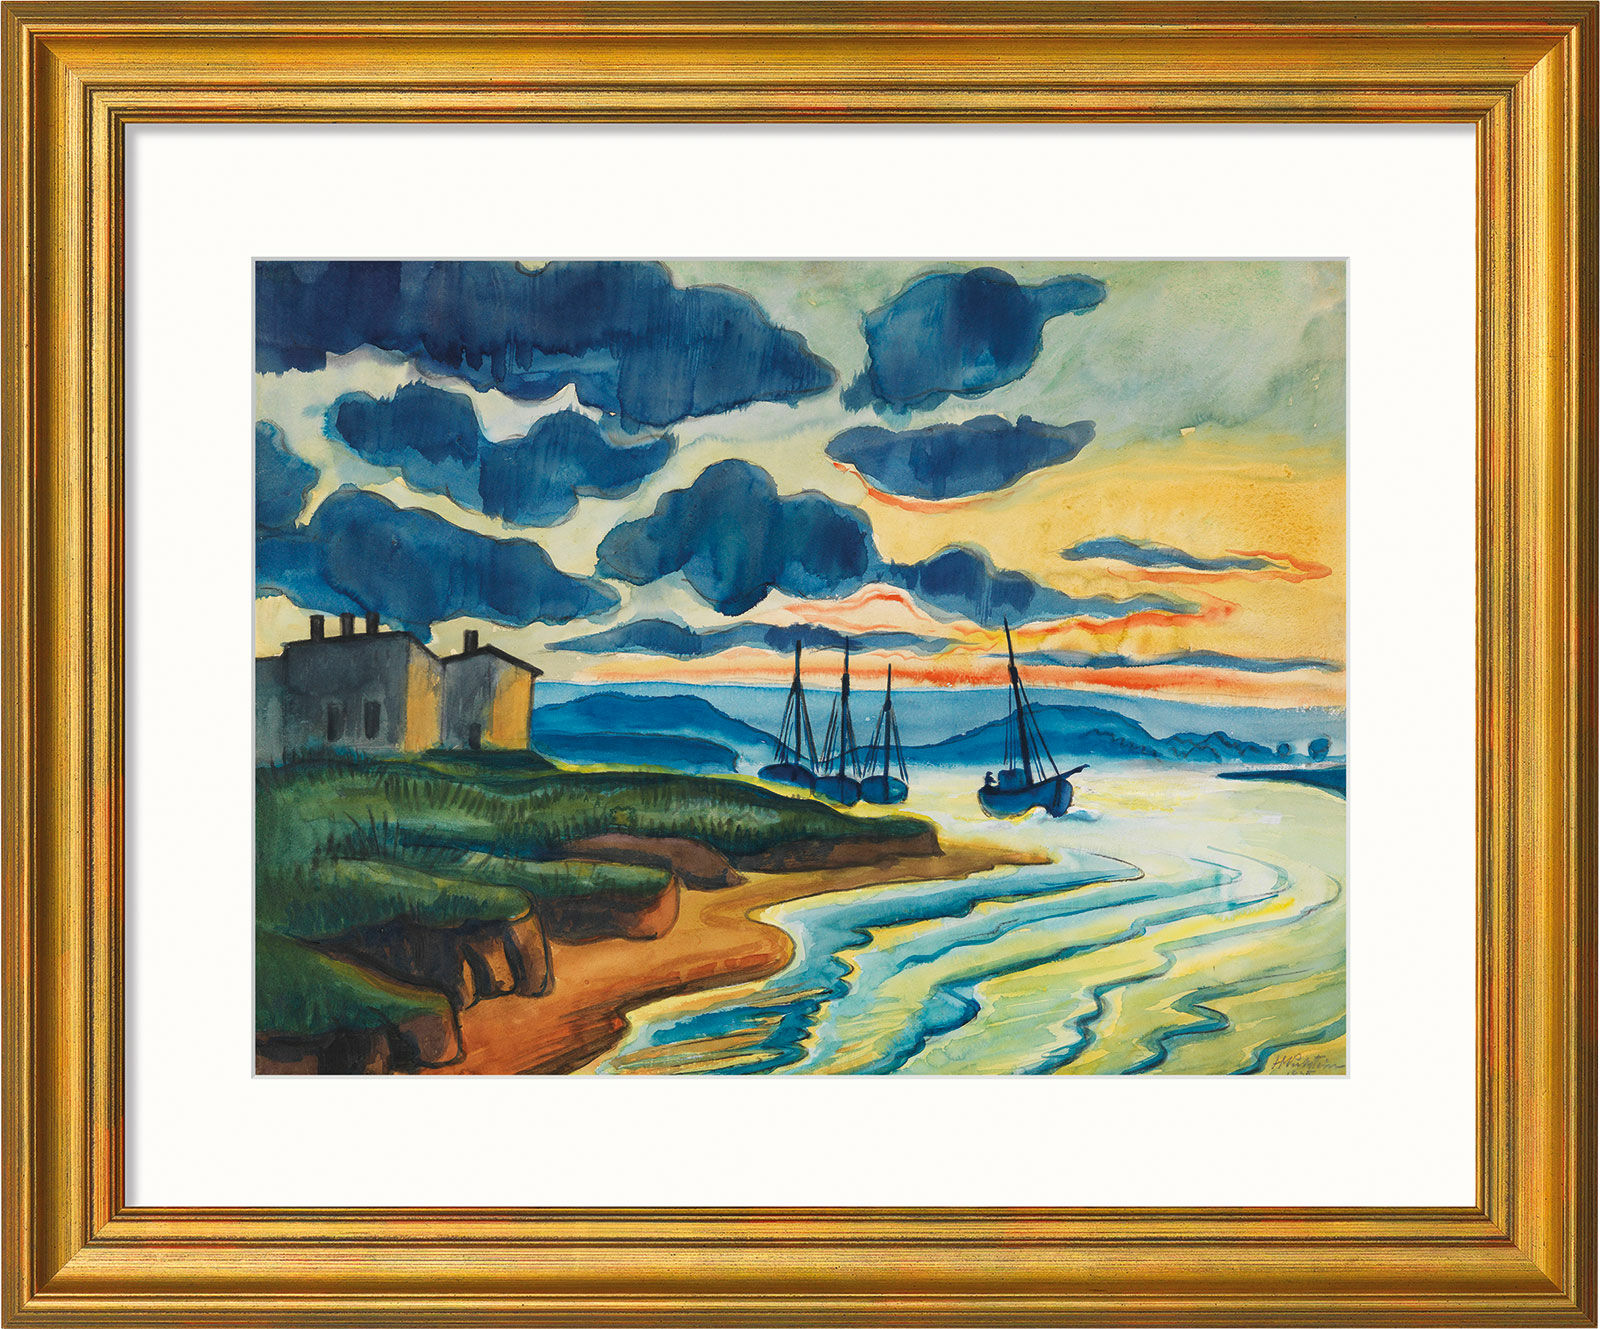 Picture "Sunset" (1925), golden framed version by Max Pechstein